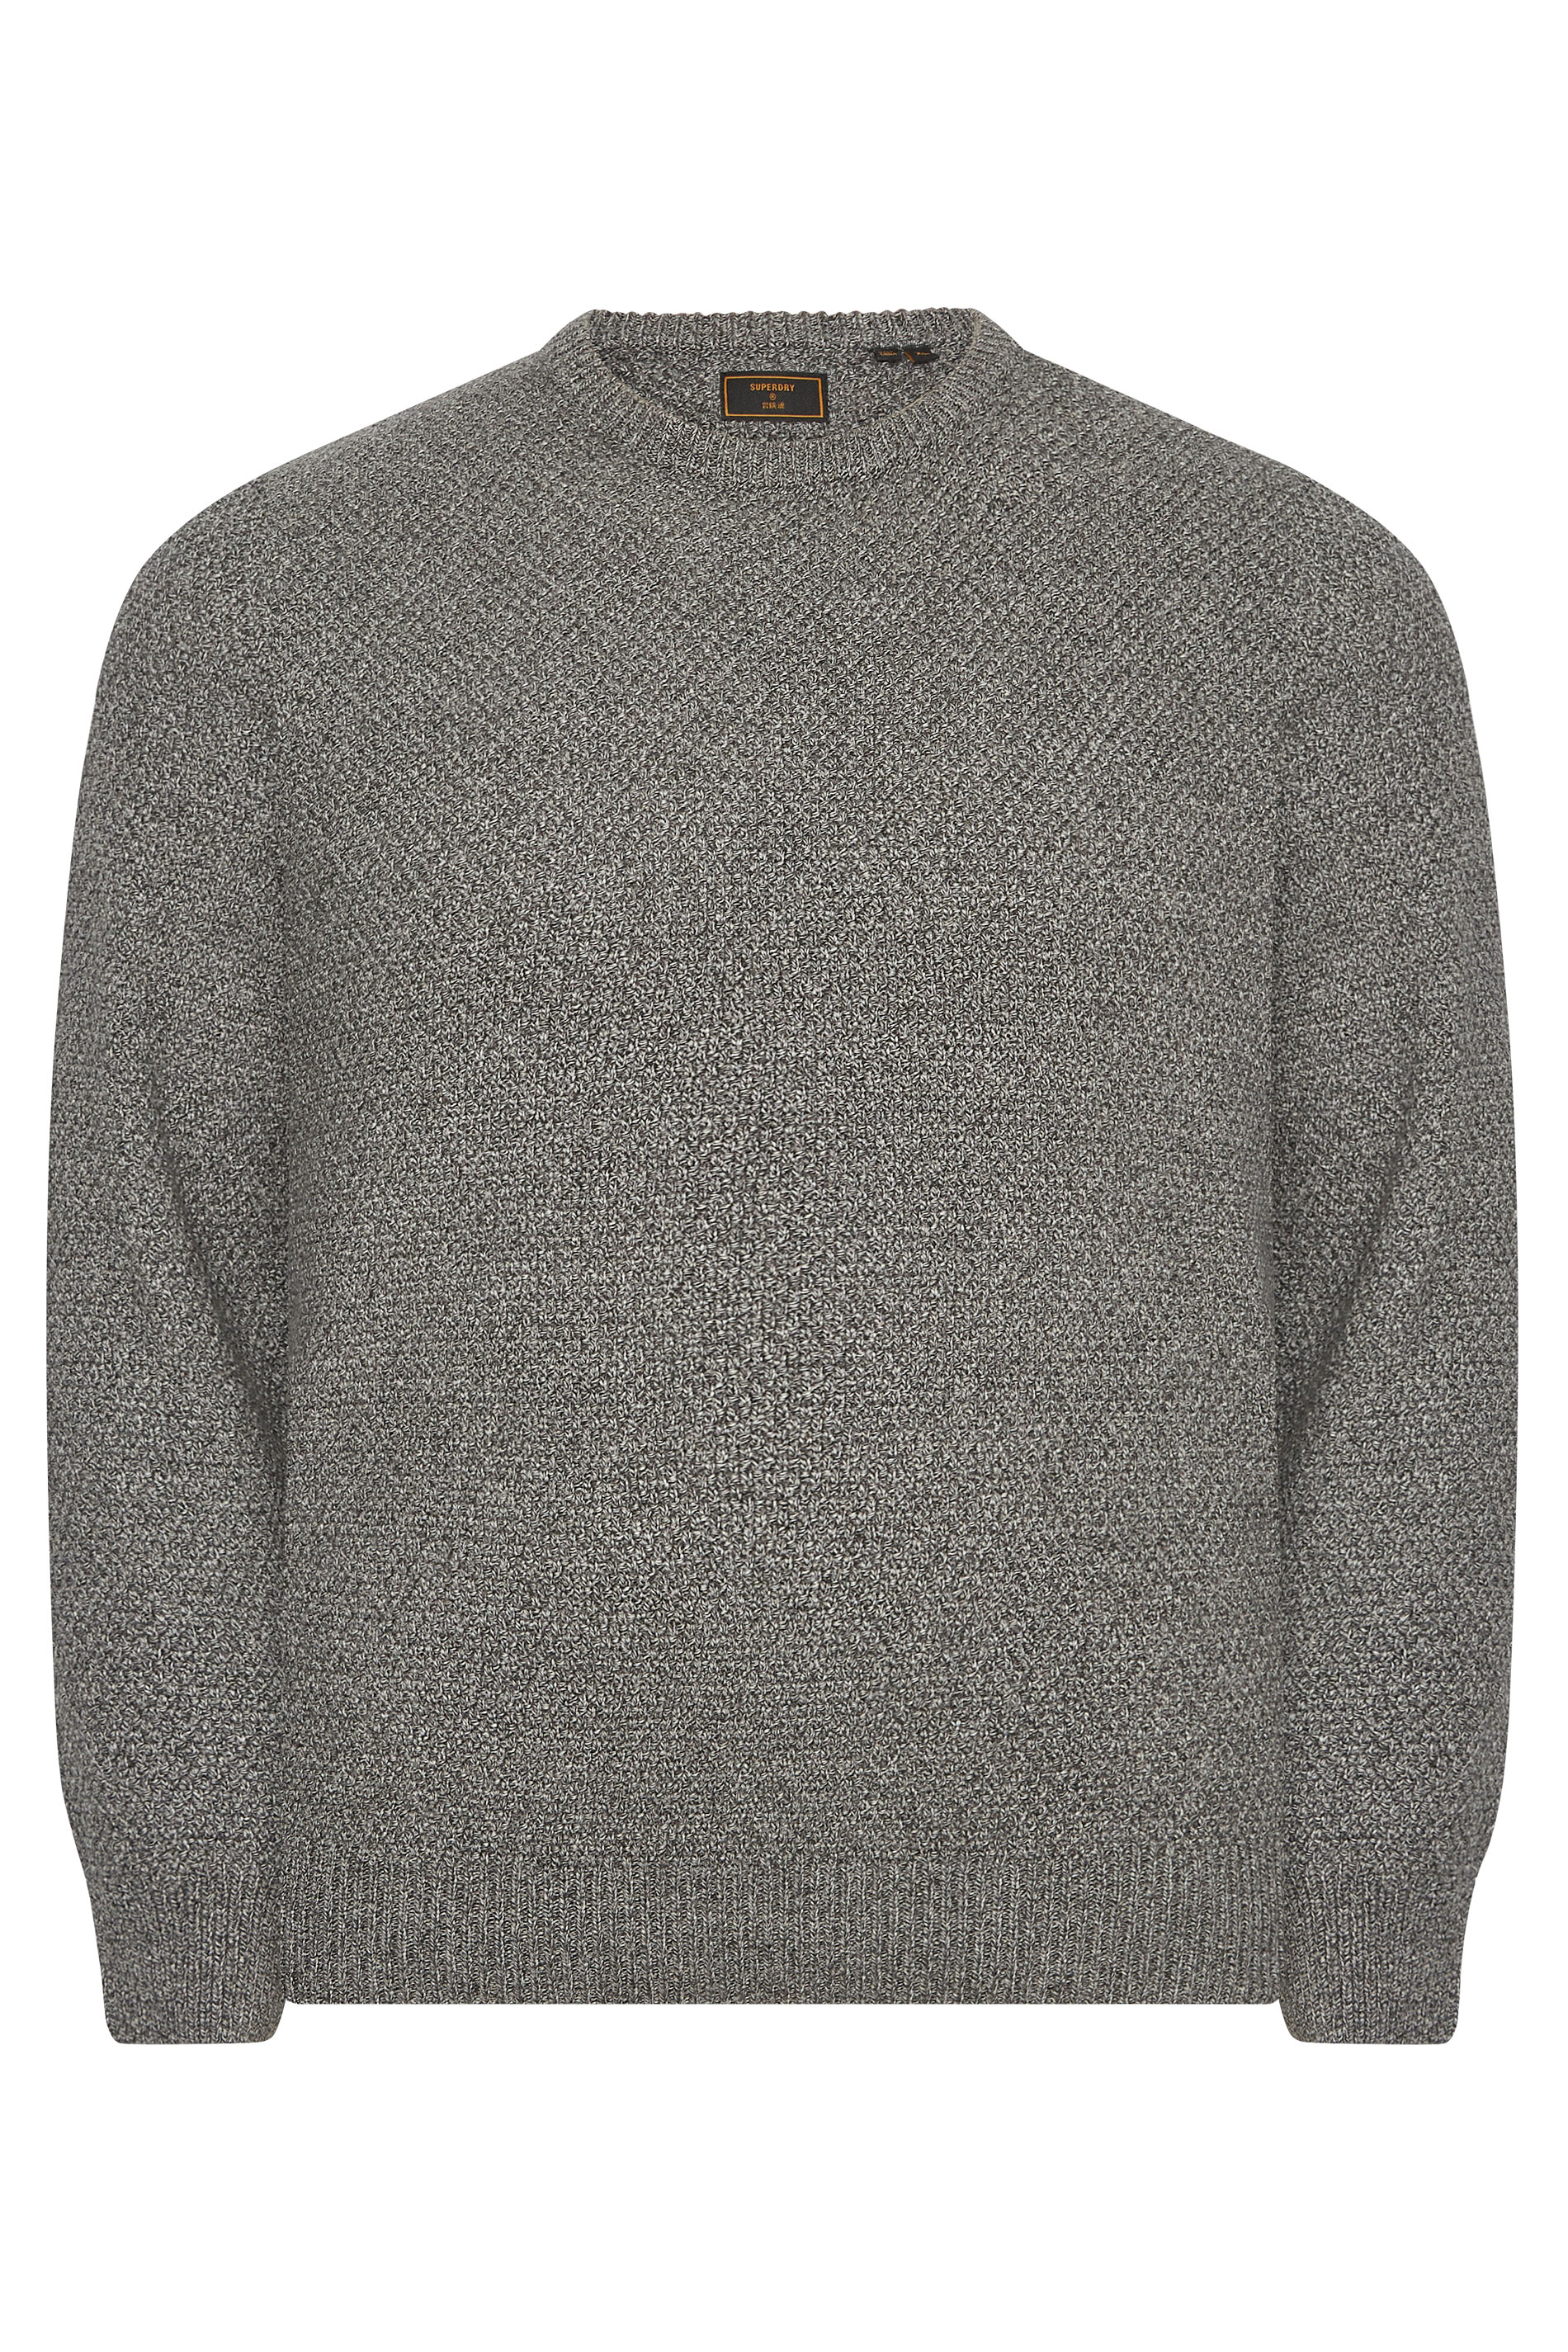 Big & Tall SUPERDRY Grey Knitted Jumper | BadRhino 1